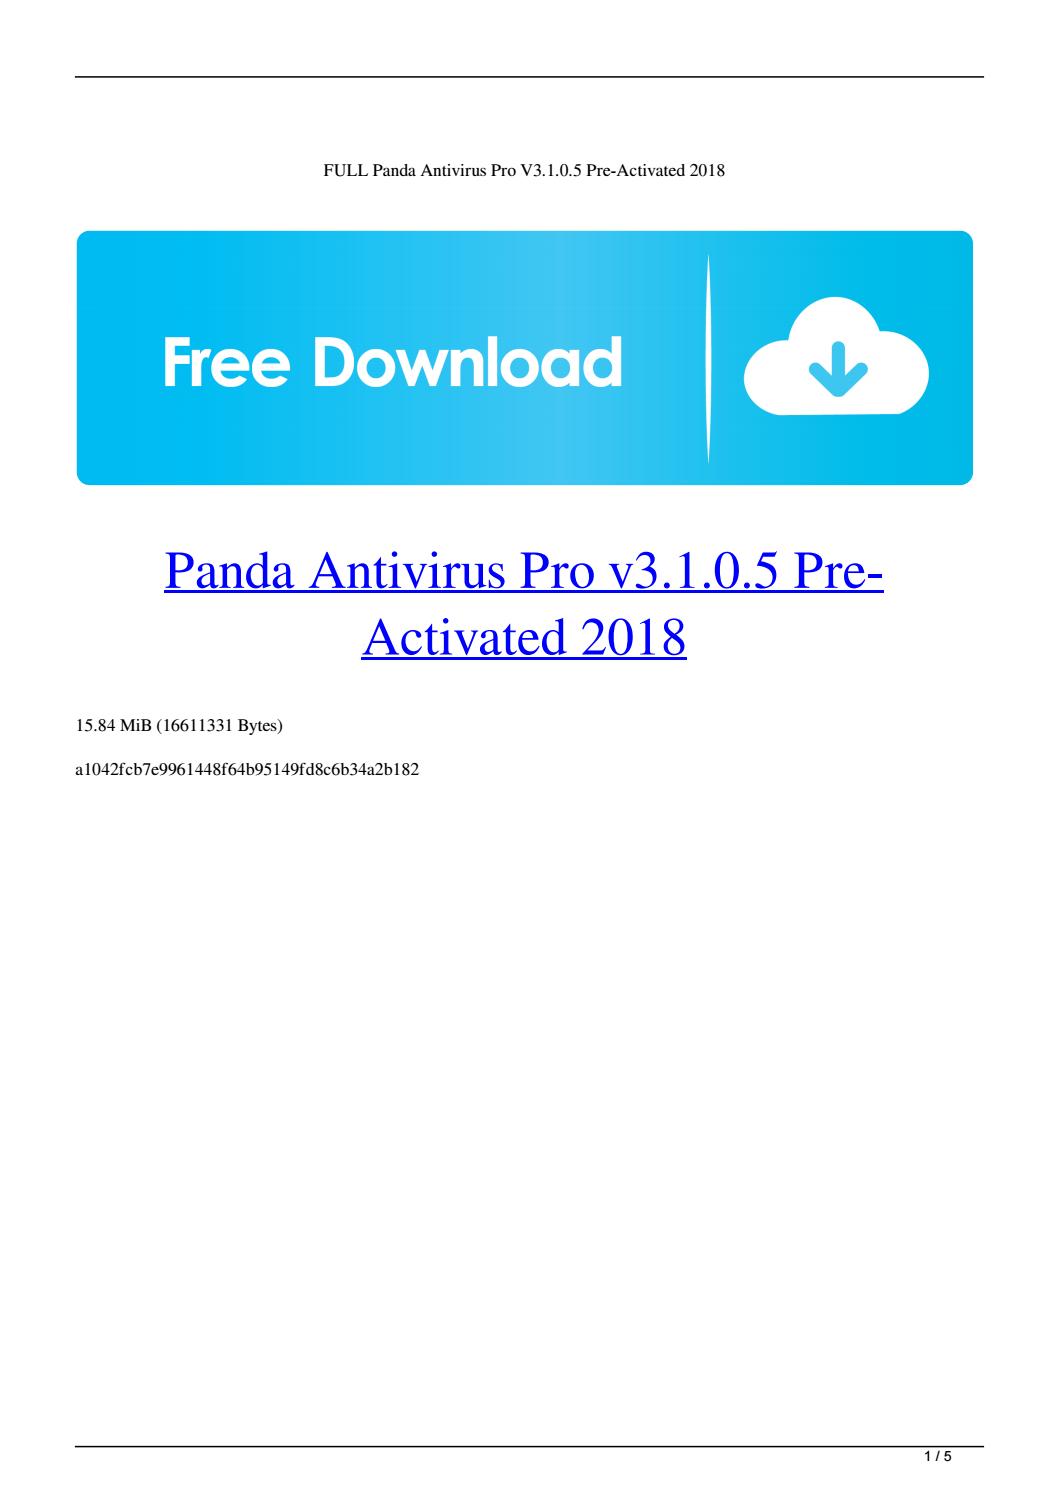 V3 Antivirus Free Download